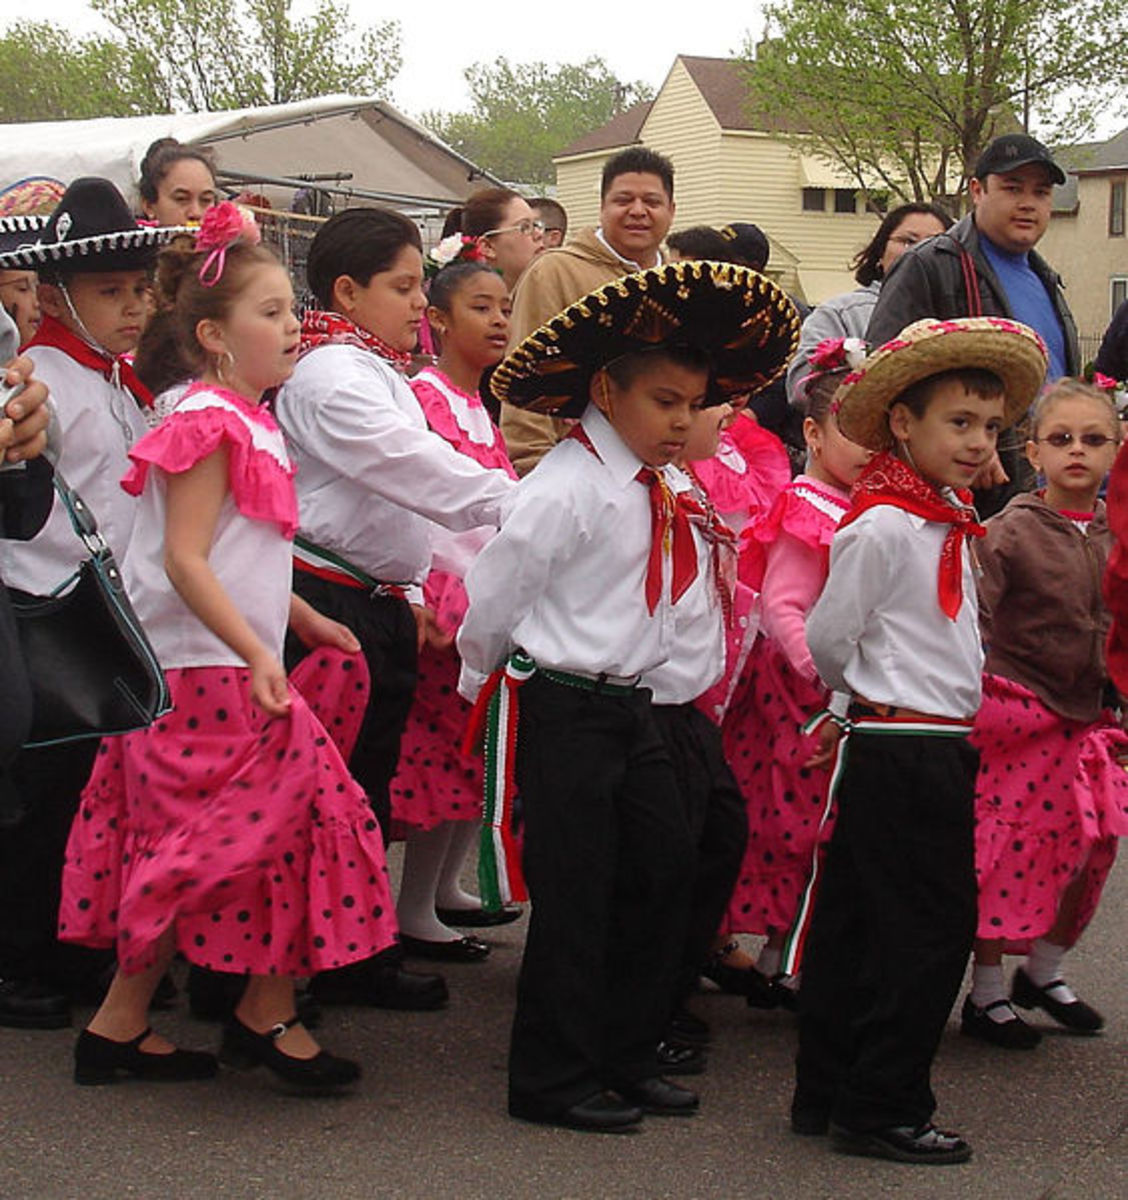 A Guide to Cinco de Mayo Celebrations in Mexico